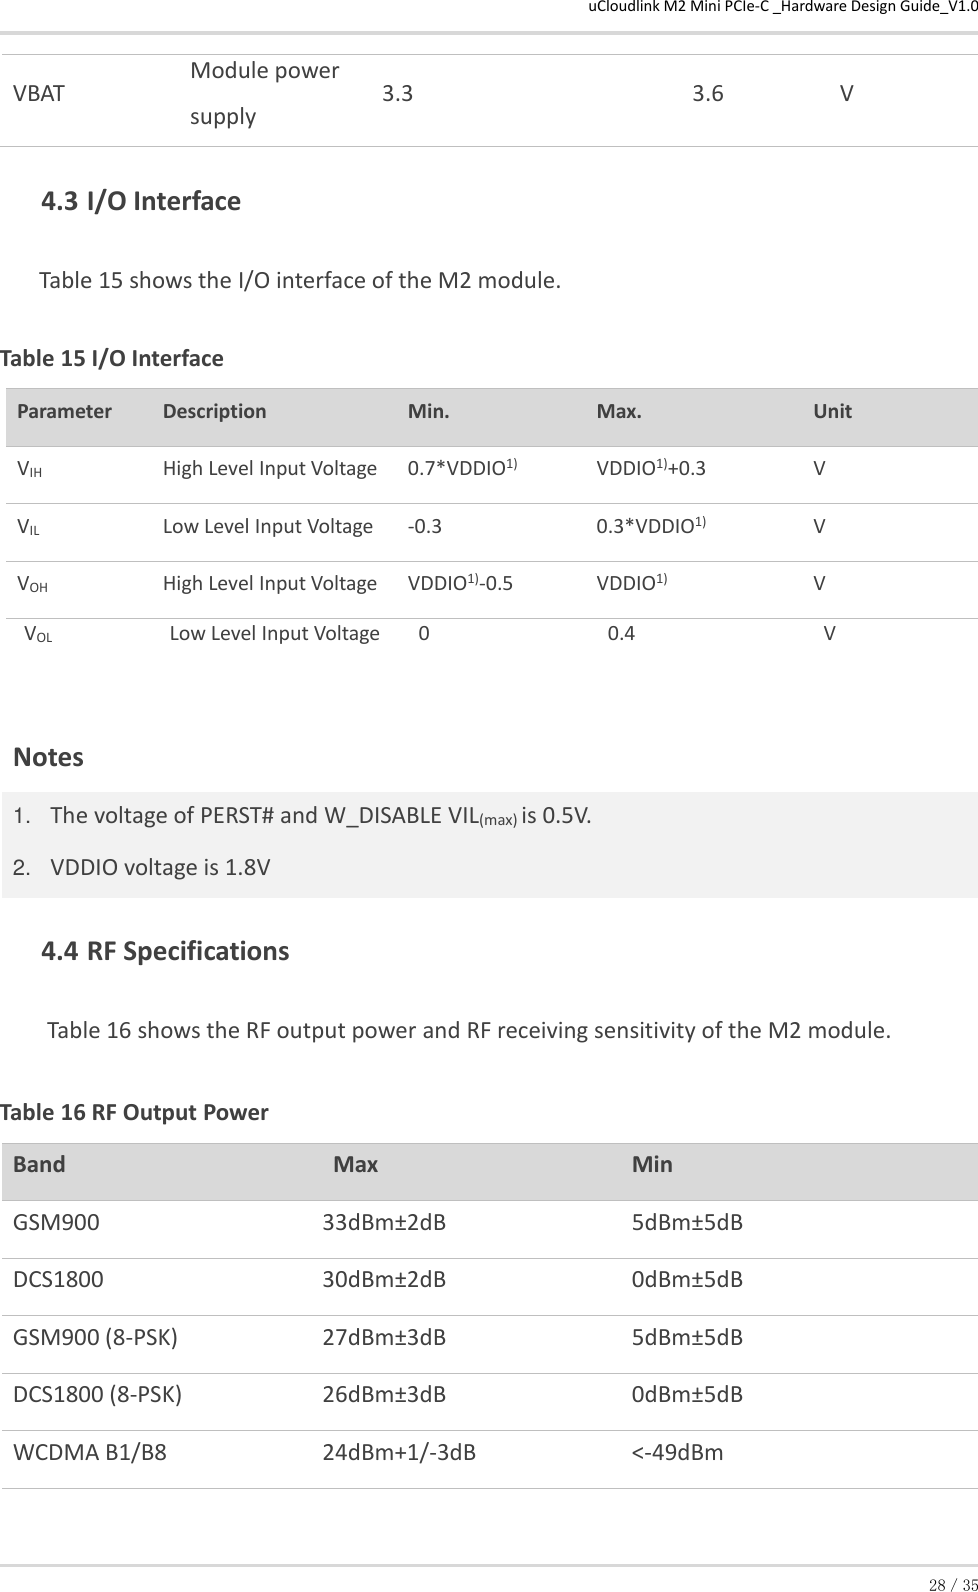 uCloudlink M2 Mini PCIe-C _Hardware Design Guide_V1.0 28／35 VBAT  Module power supply 3.3   3.6  V   4.3  I/O Interface     Table 15 shows the I/O interface of the M2 module.   Table 15 I/O Interface Parameter Description  Min. Max.  Unit VIH  High Level Input Voltage 0.7*VDDIO1)  VDDIO1)+0.3  V  VIL  Low Level Input Voltage -0.3  0.3*VDDIO1)  V  VOH  High Level Input Voltage VDDIO1)-0.5  VDDIO1)  V  VOL  Notes  Low Level Input Voltage 0                                    0.4                                      V  1. The voltage of PERST# and W_DISABLE VIL(max) is 0.5V. 2. VDDIO voltage is 1.8V  4.4  RF Specifications Table 16 shows the RF output power and RF receiving sensitivity of the M2 module.  Table 16 RF Output Power Band Max Min  GSM900  33dBm±2dB  5dBm±5dB  DCS1800  30dBm±2dB  0dBm±5dB  GSM900 (8-PSK)  27dBm±3dB  5dBm±5dB  DCS1800 (8-PSK)  26dBm±3dB  0dBm±5dB  WCDMA B1/B8  24dBm+1/-3dB  &lt;-49dBm  